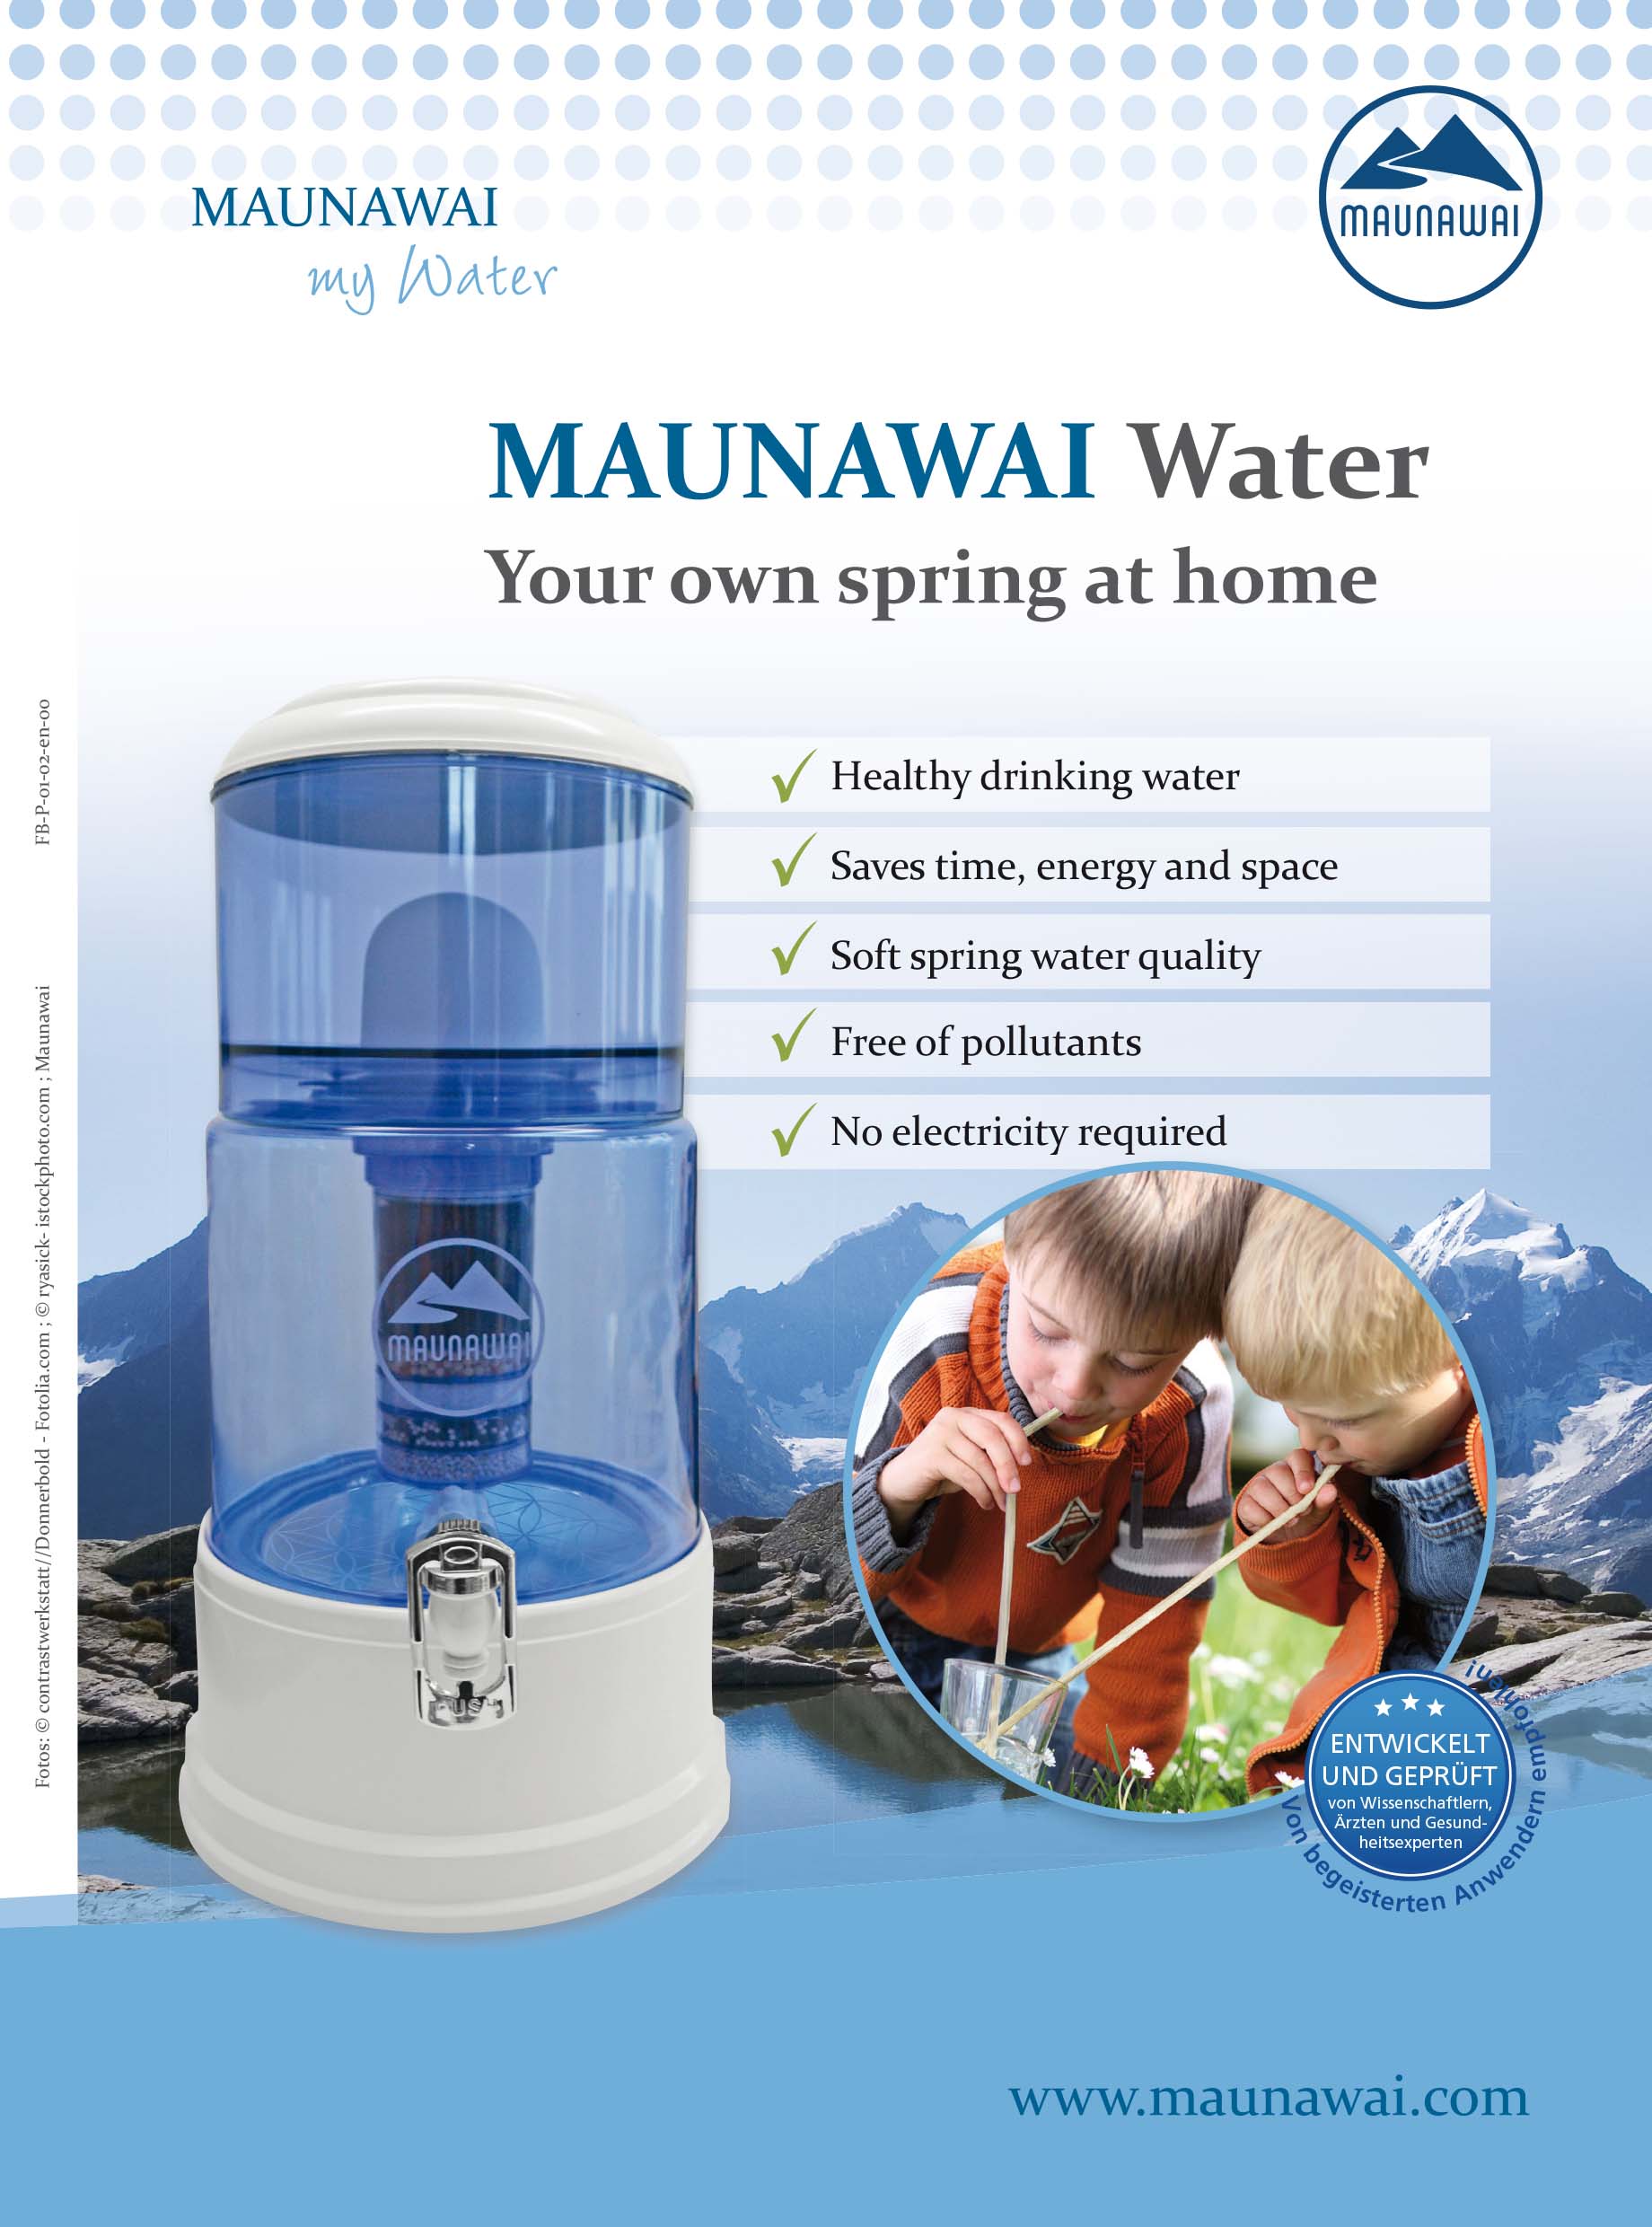 Maunawai_Wasser_FB_A5_en-1.jpg